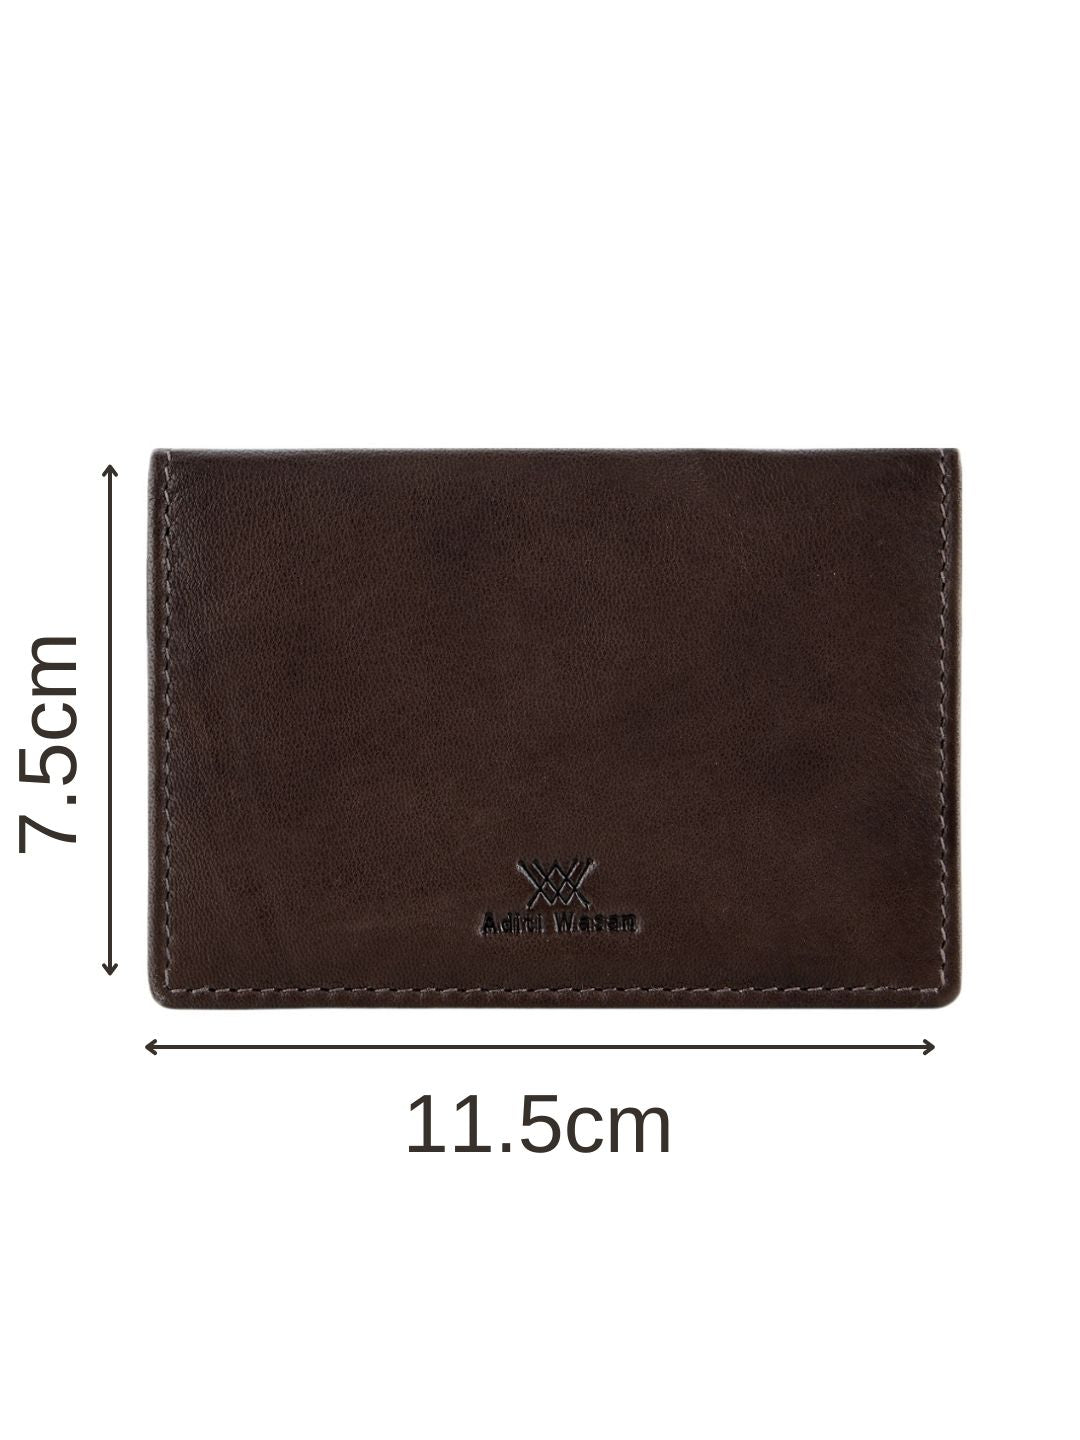 Brown Genuine Leather Cardholder